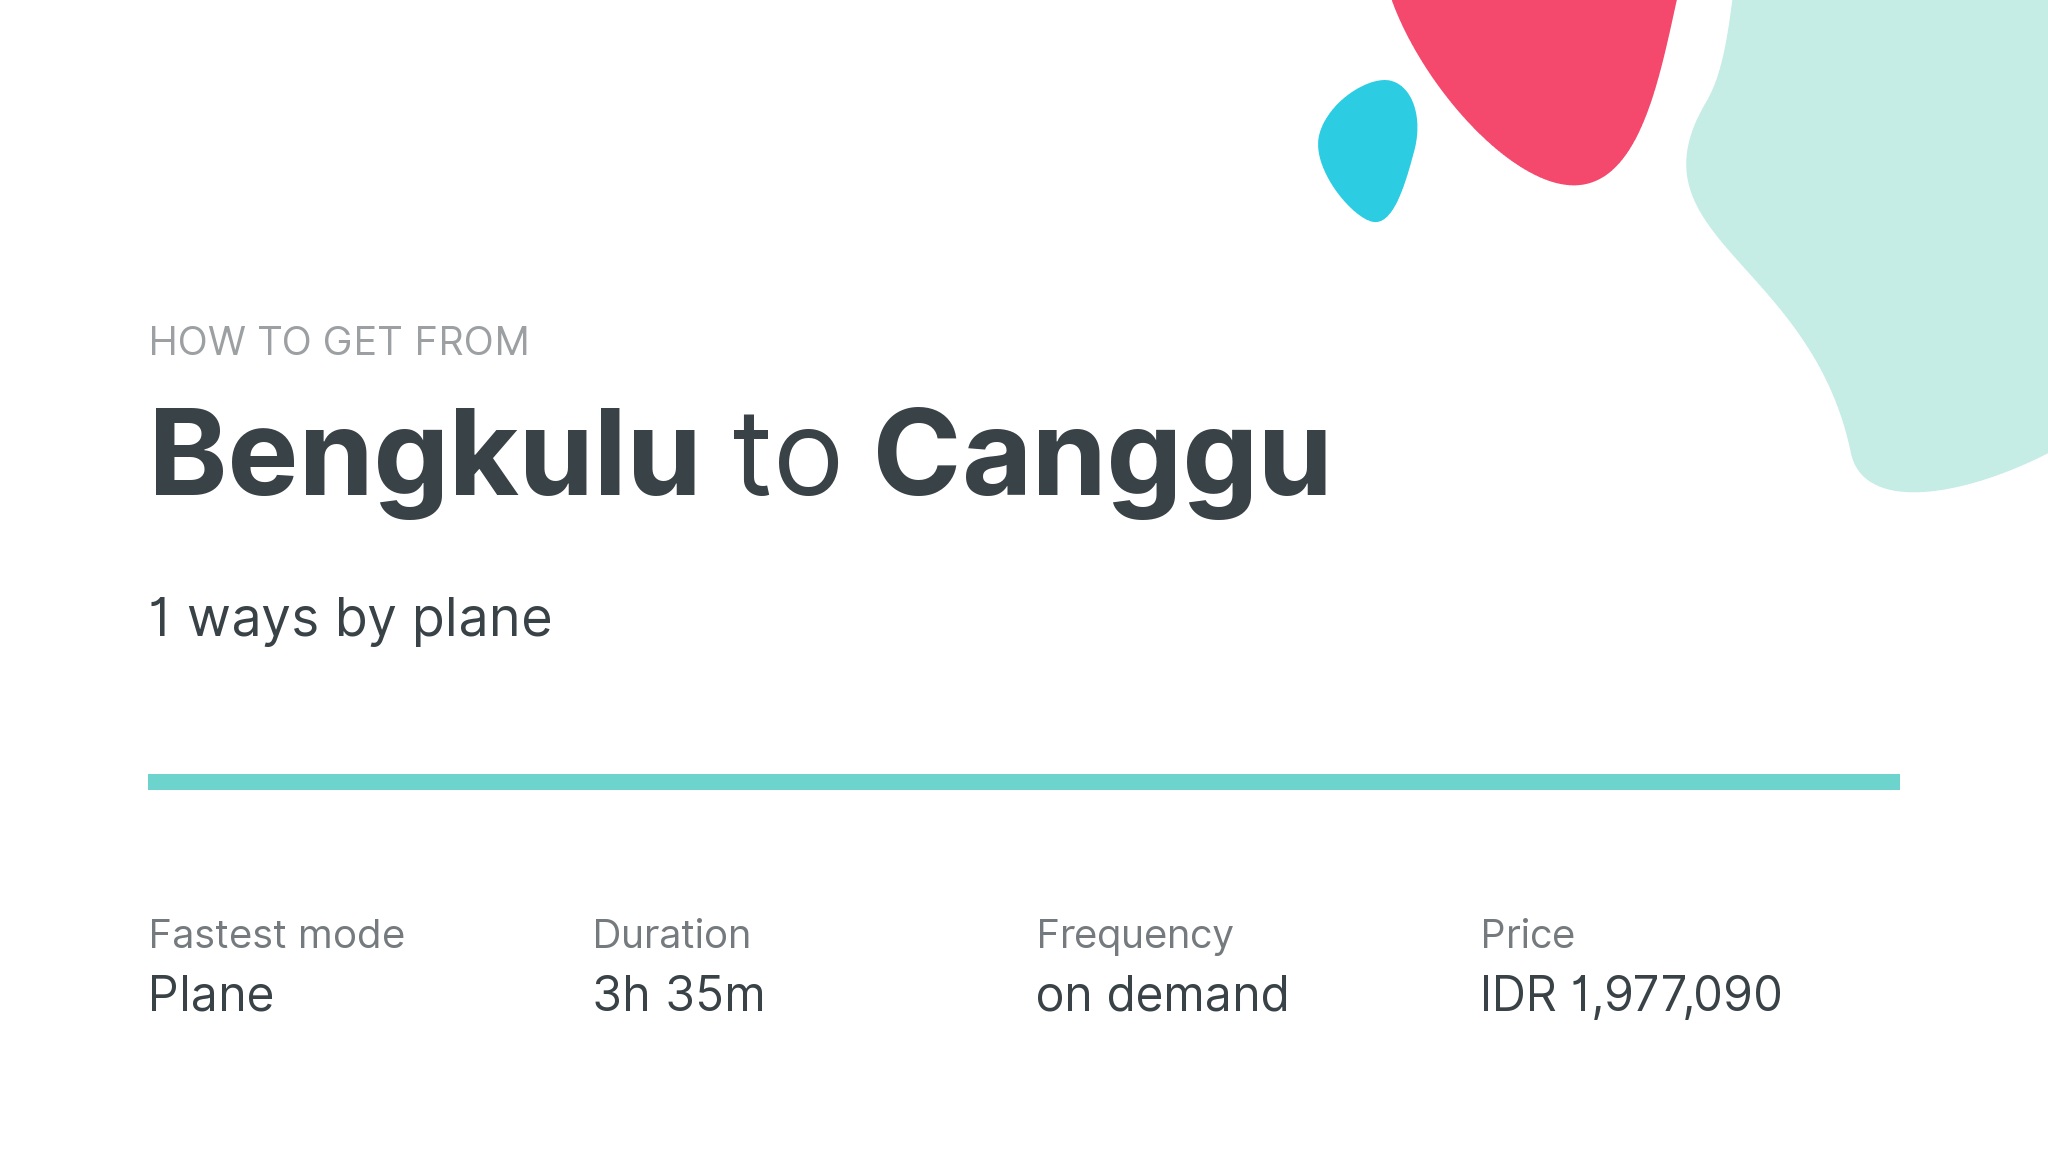 How do I get from Bengkulu to Canggu